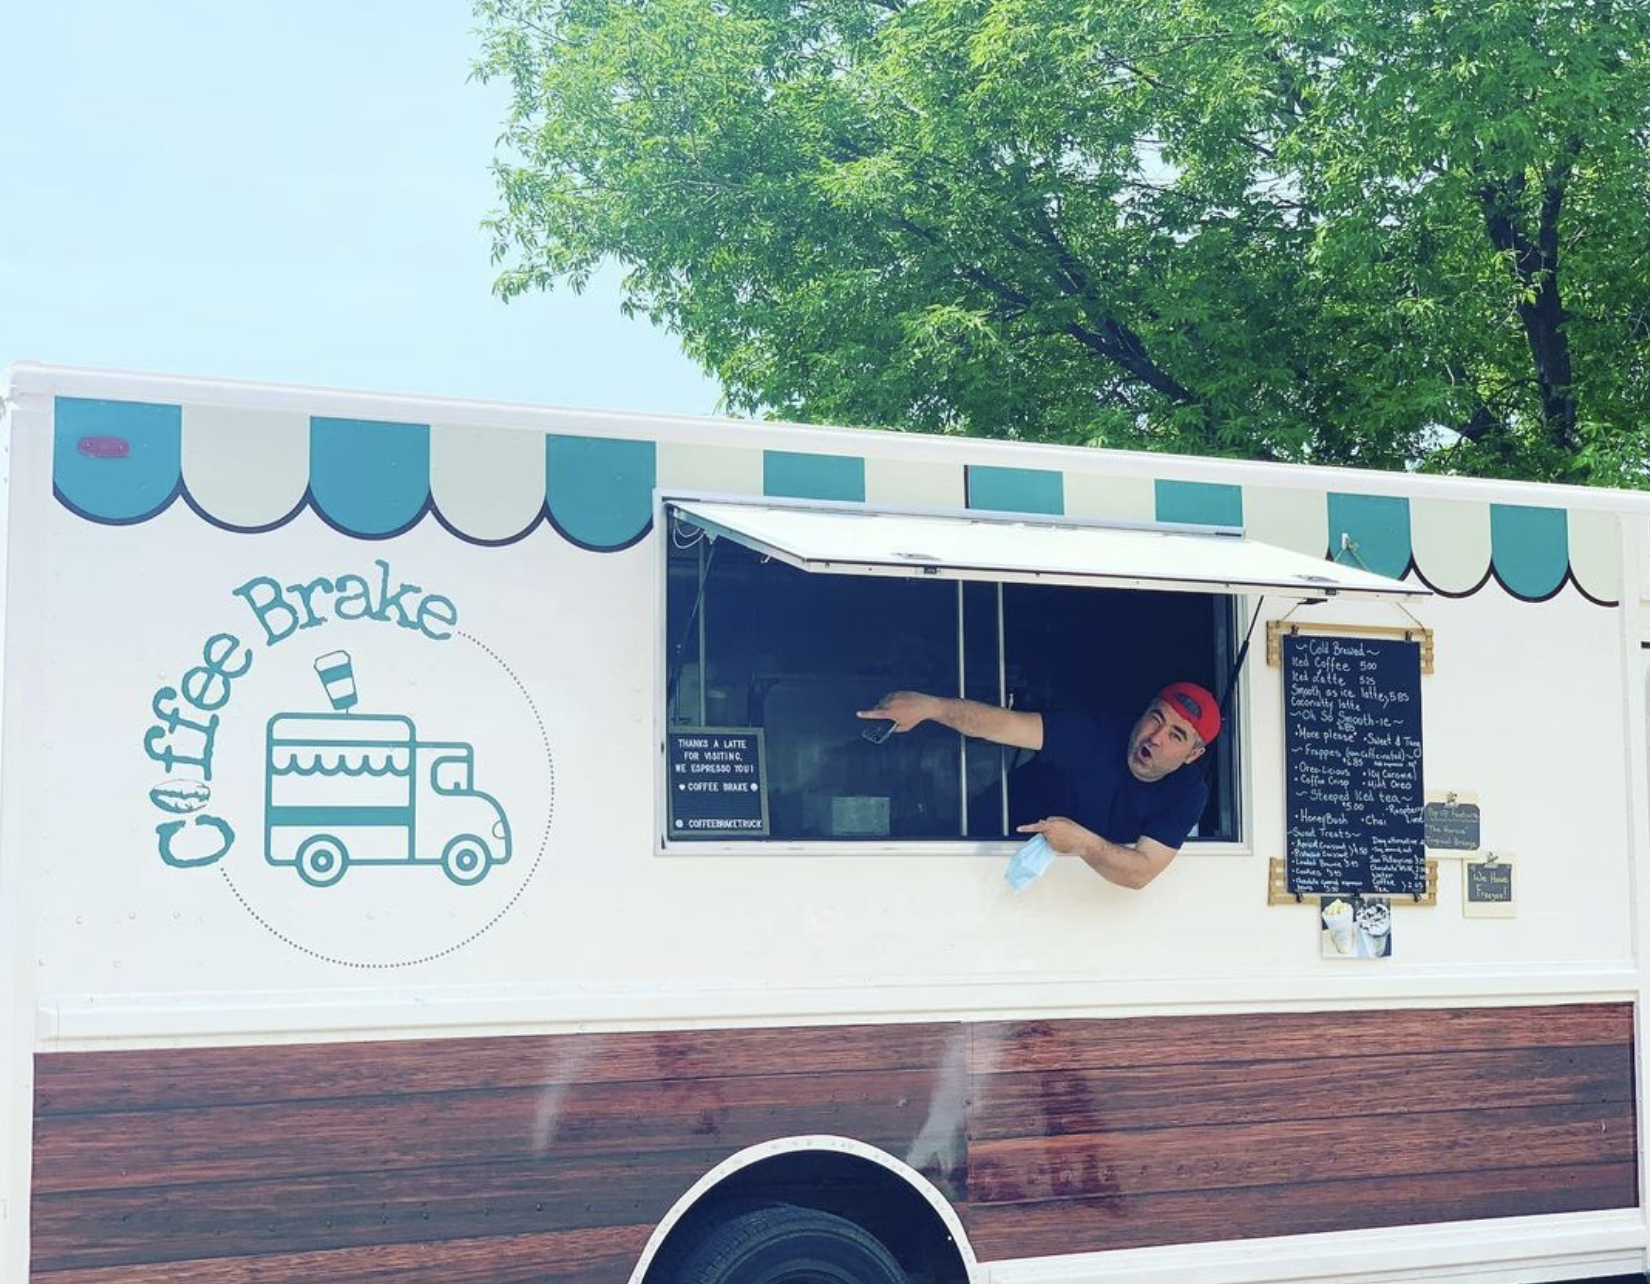 Sparkplug Coffee is served at the Coffee Brake Truck!